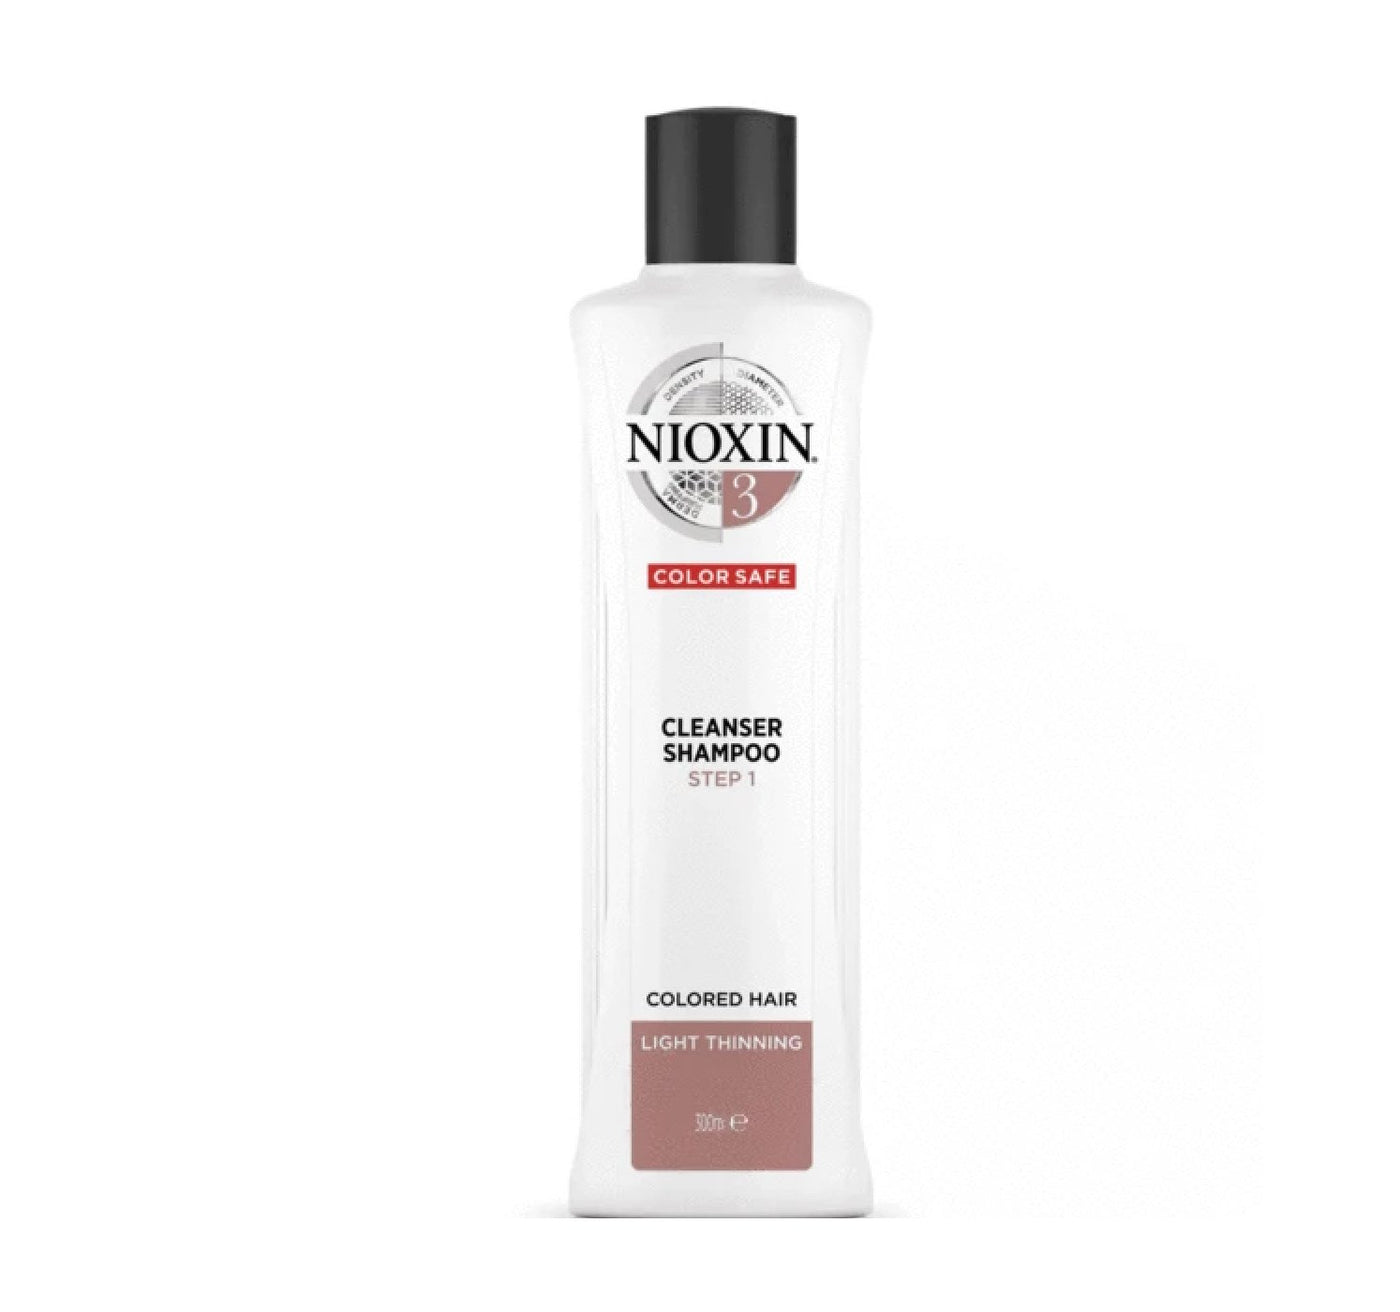 Nioxin System 3 Cleanser Shampoo 300ml - Salon Warehouse